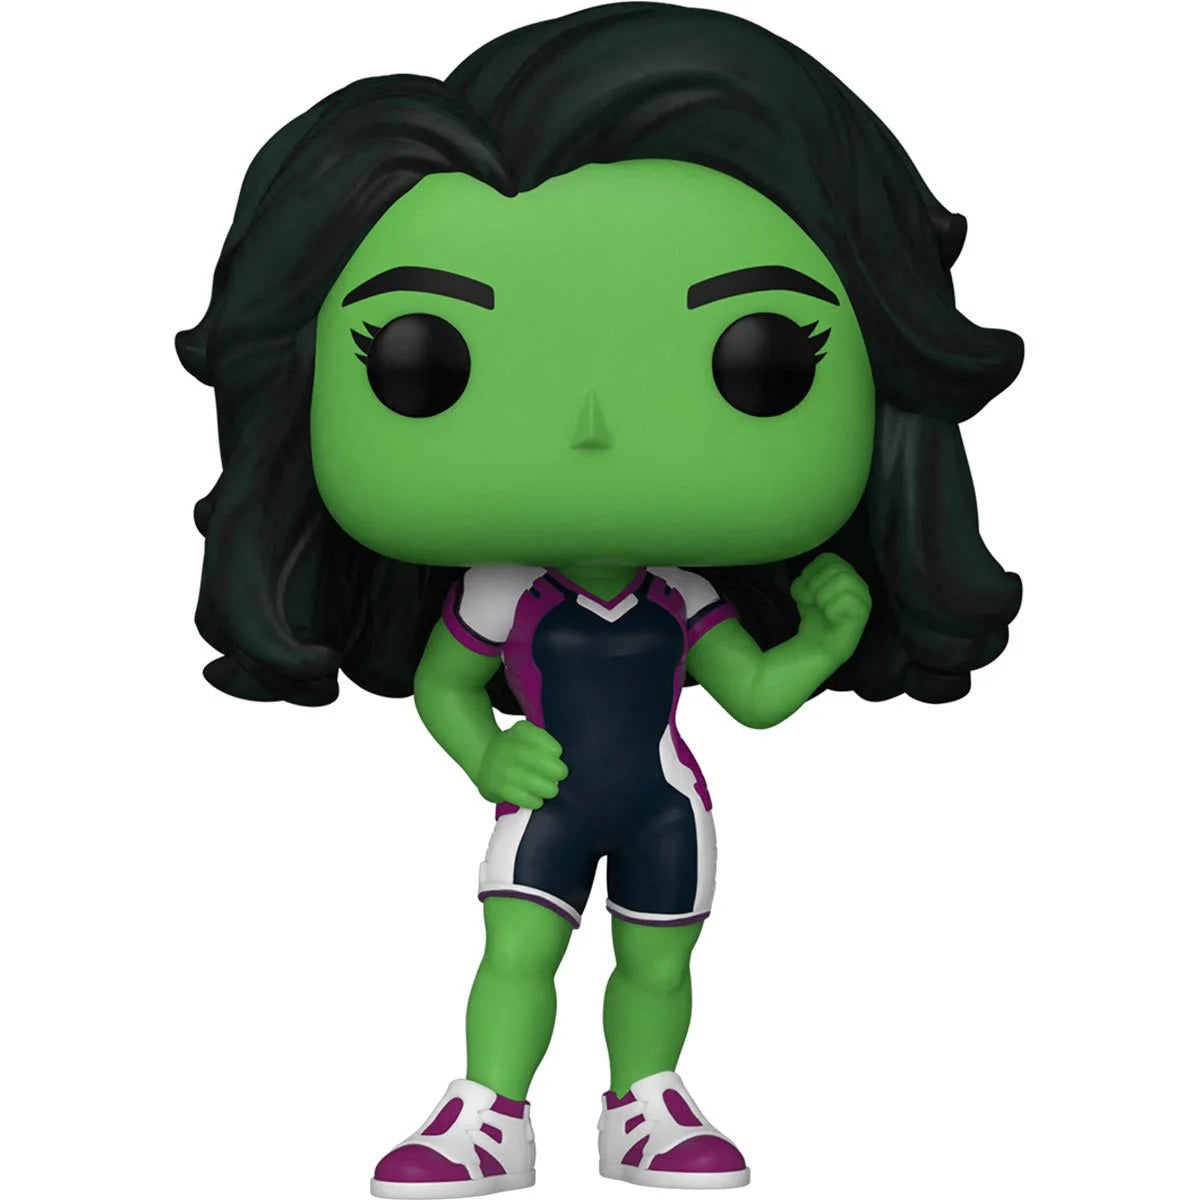 Marvel Funko Pop!: She-Hulk #1126